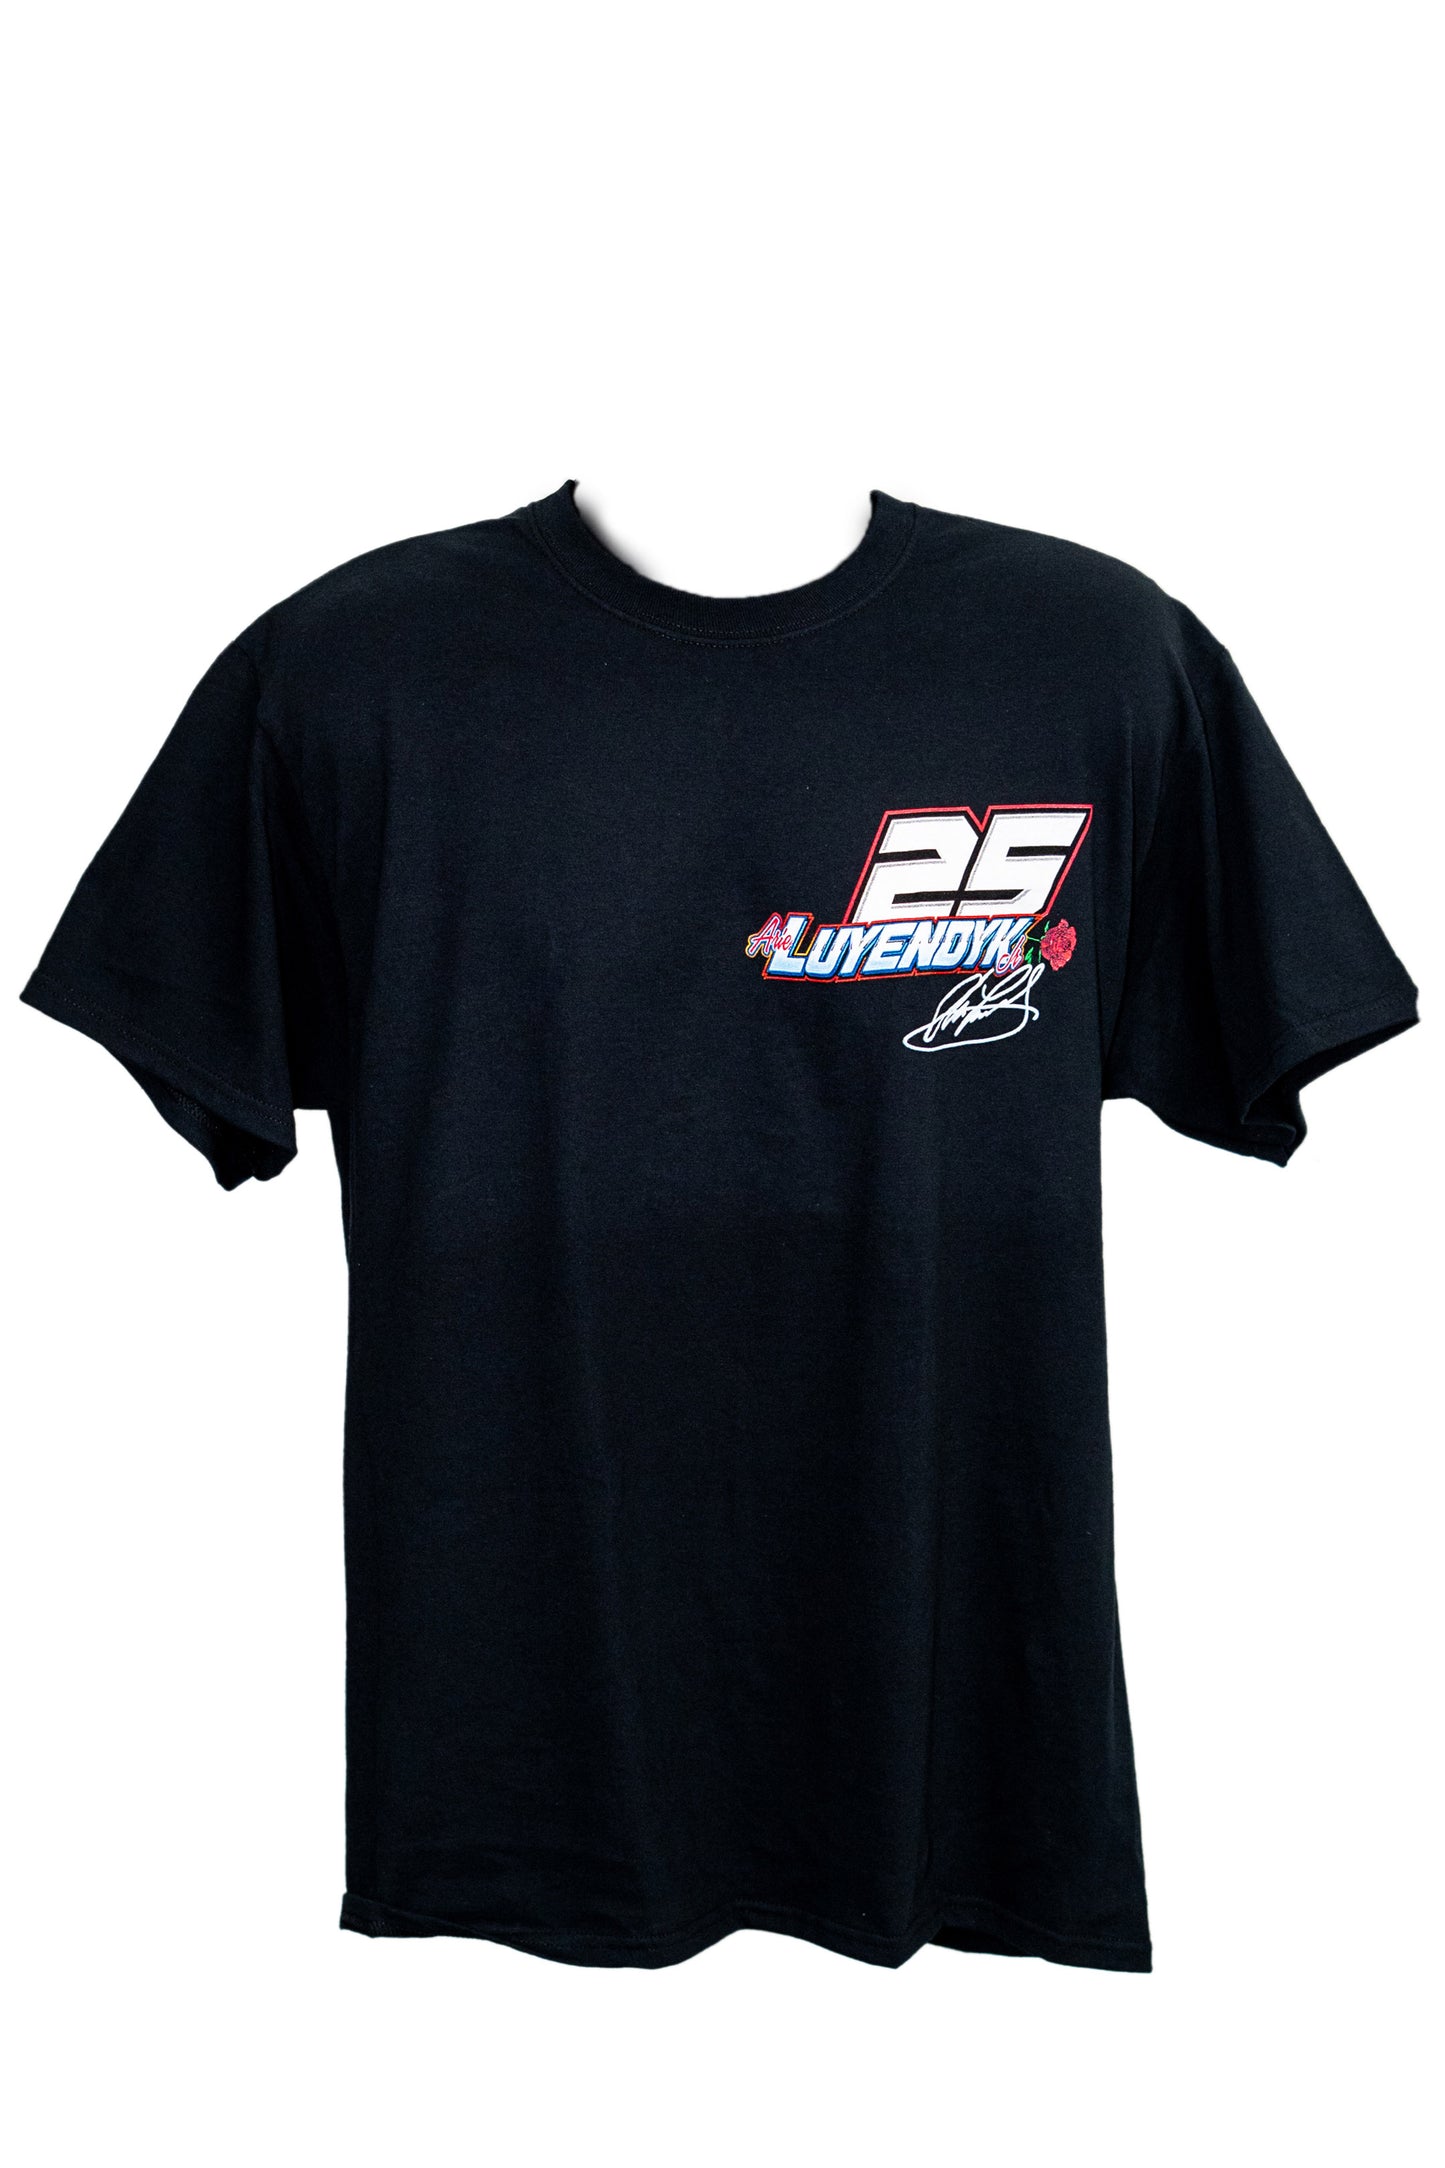 Arie Luyendyk Jr #25 Short Sleeve Graphic T-Shirt